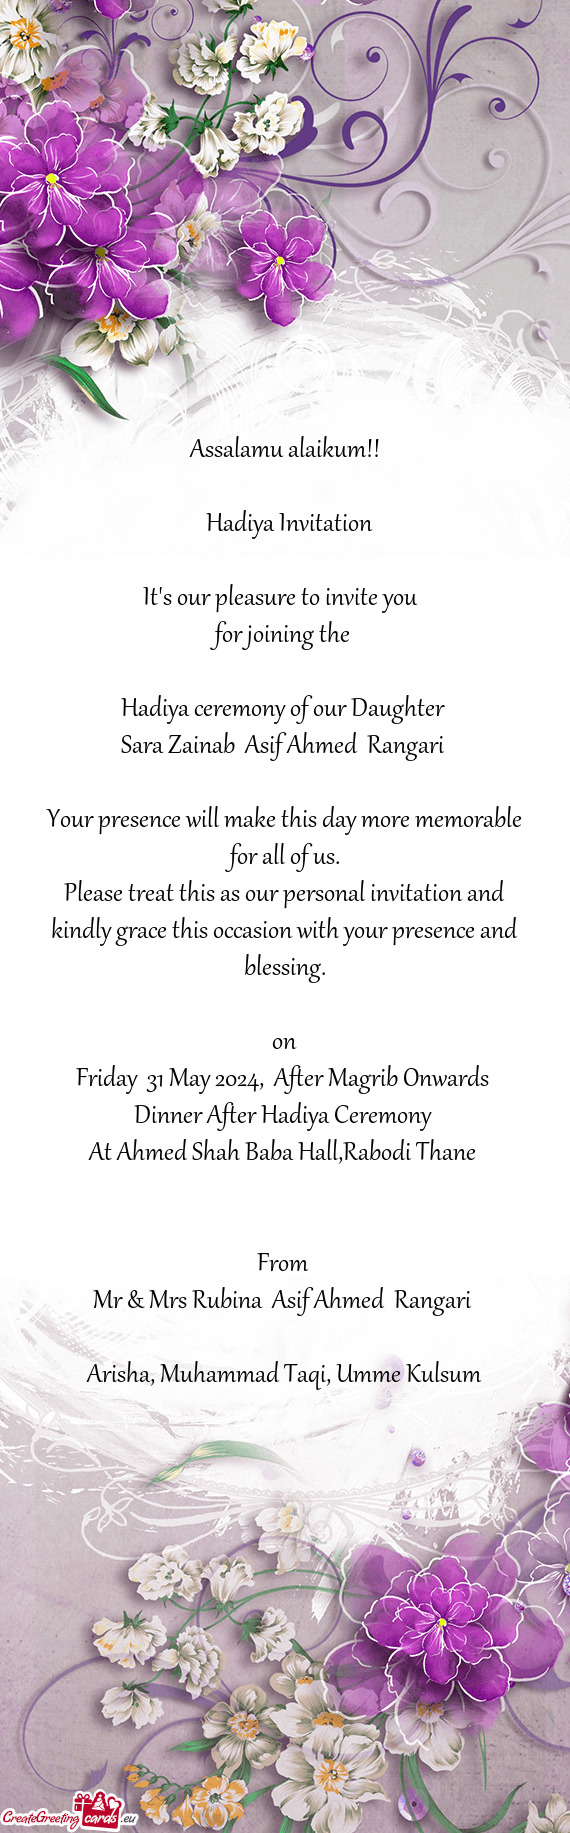 Hadiya Invitation